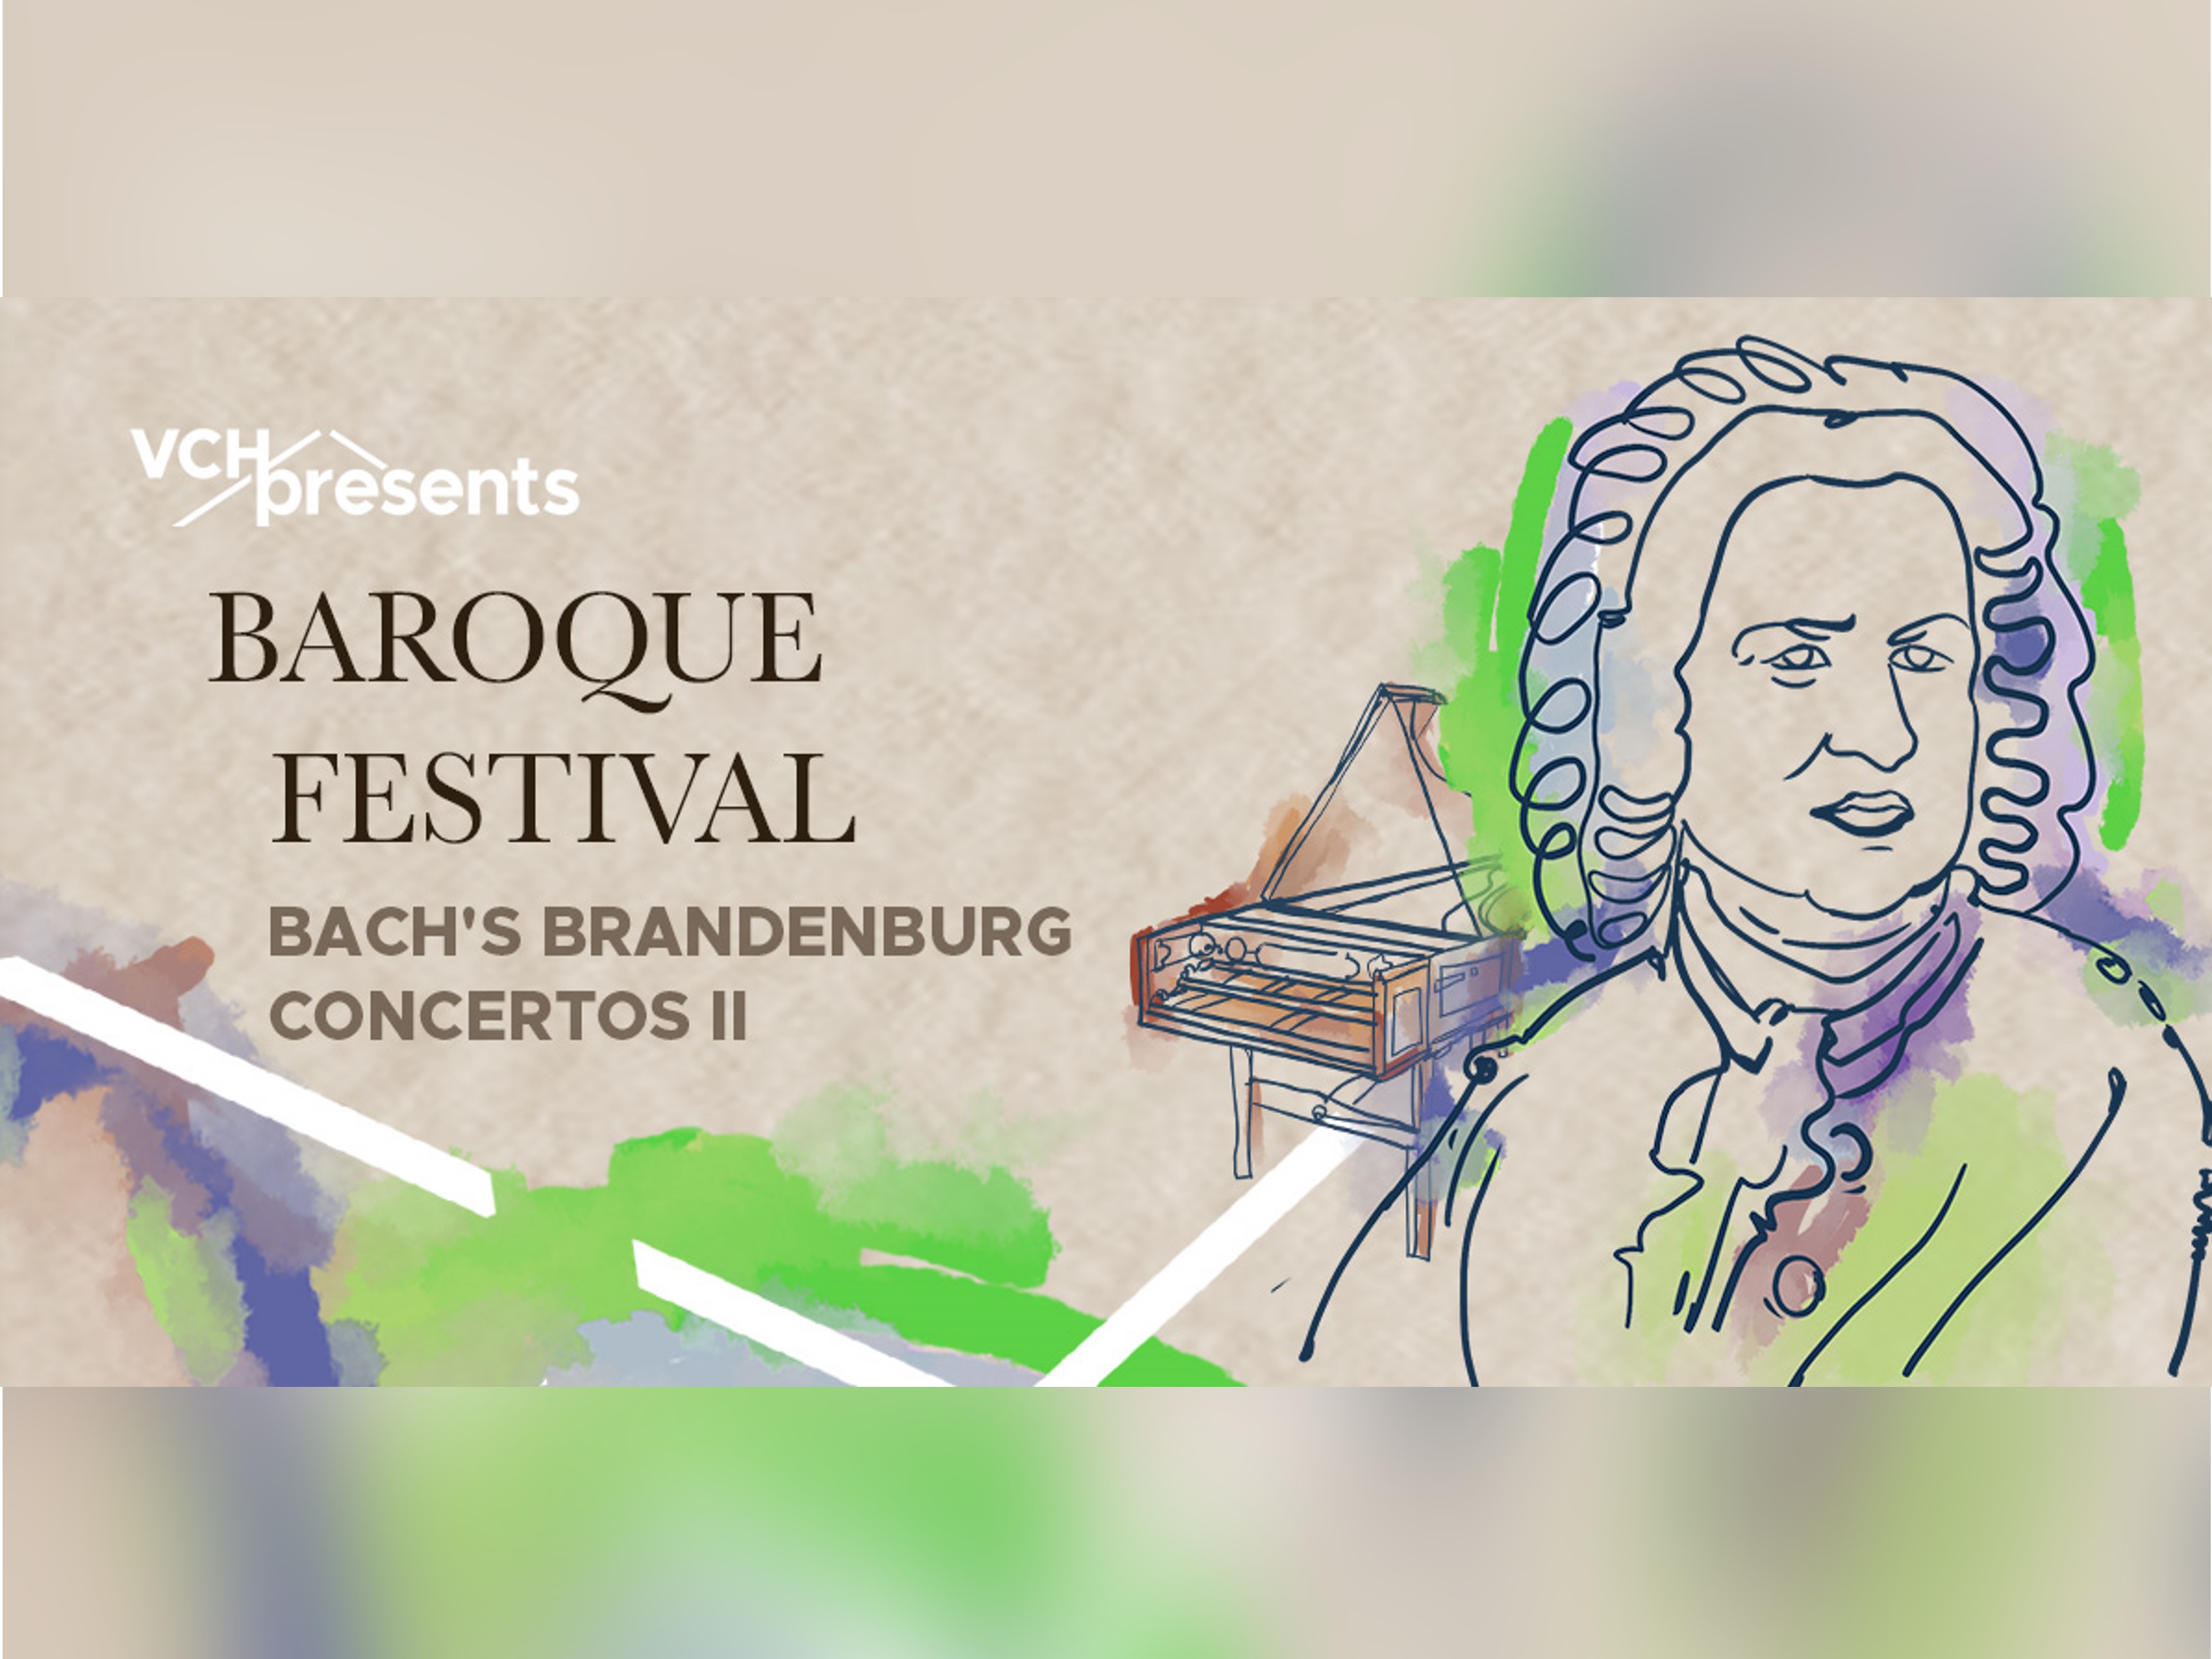 VCHpresents Baroque Festival: Bach’s Brandenburg Concertos Part II